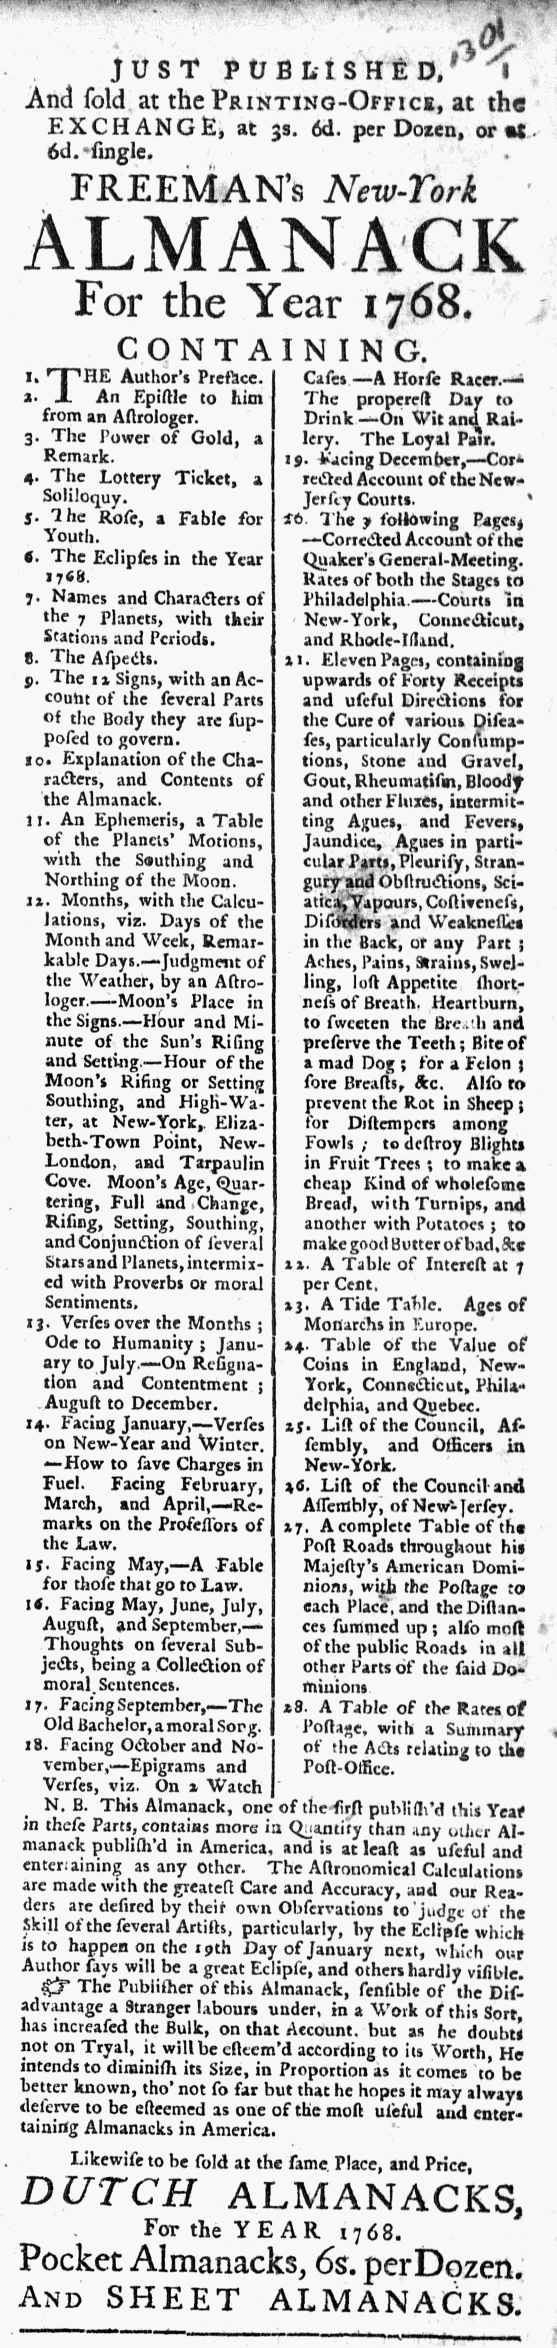 Dec 10 - 12:10:1767 New-York Journal